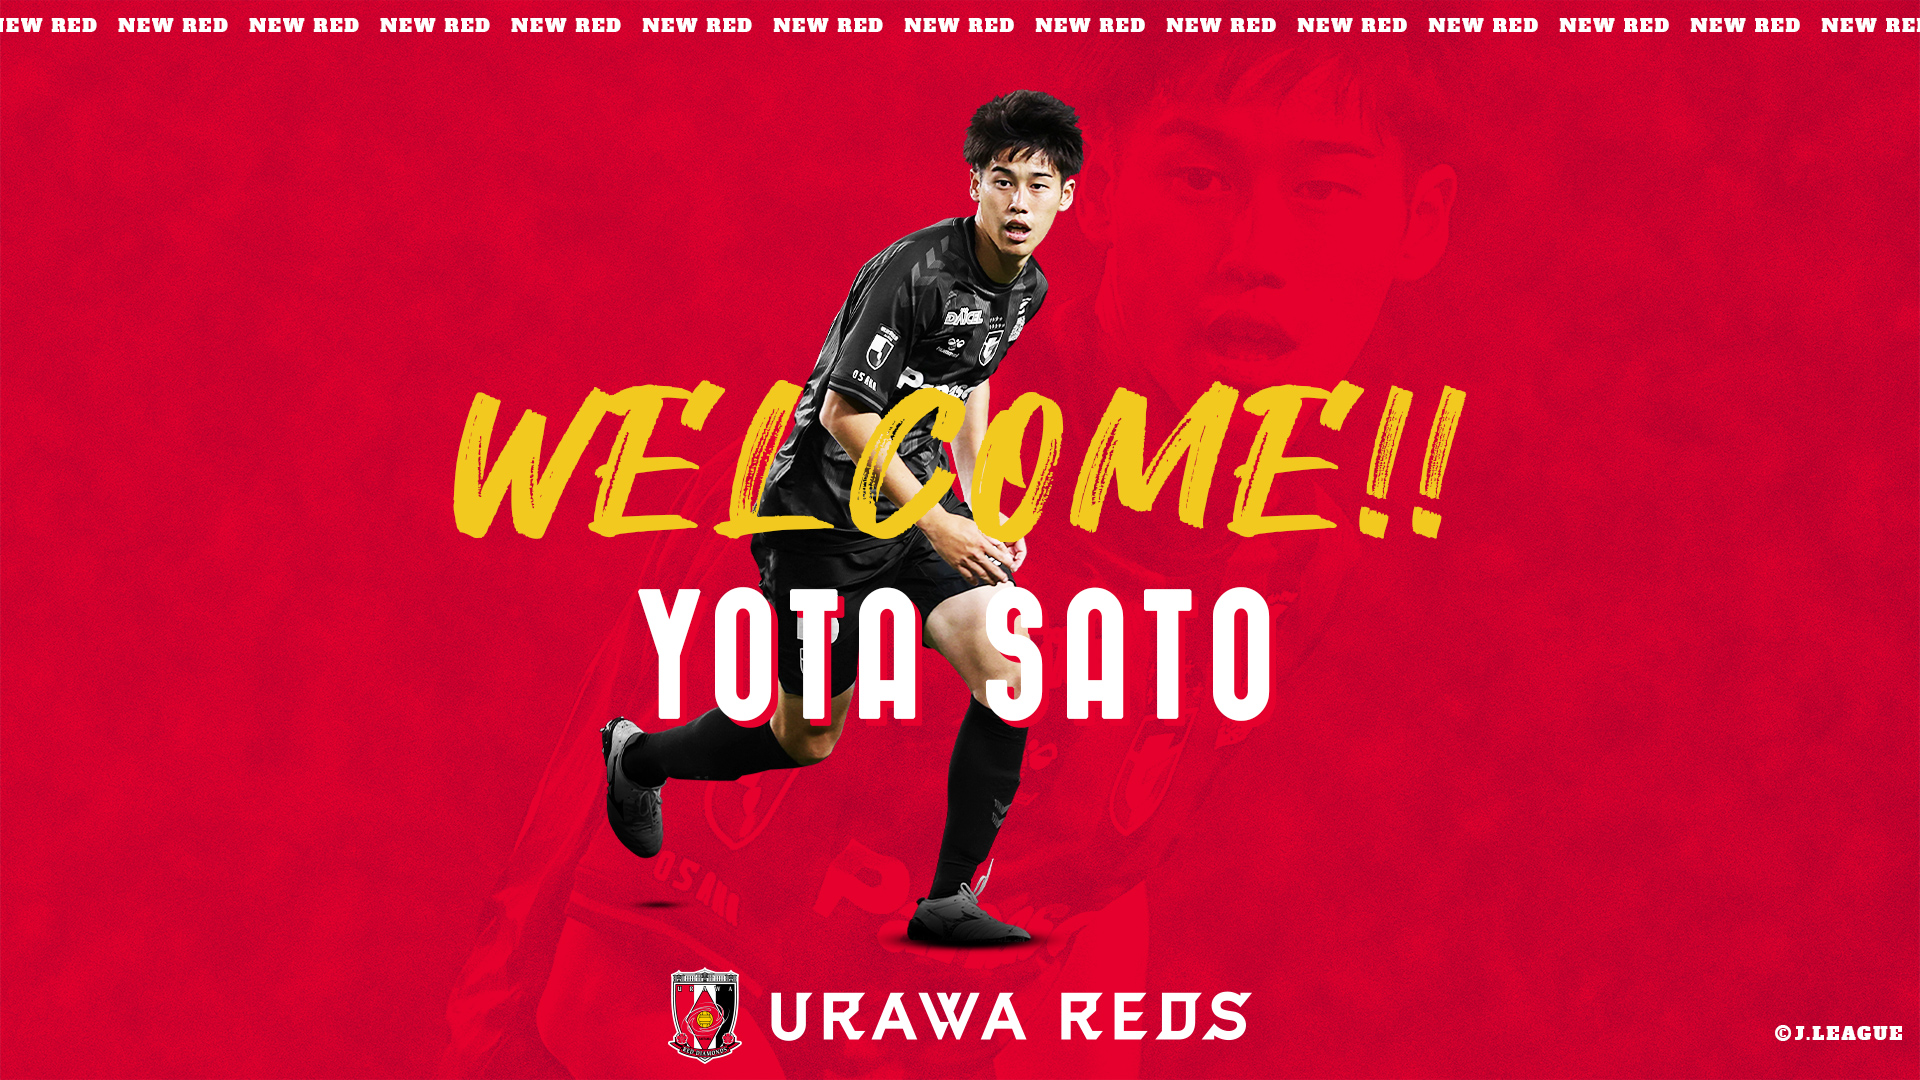 Announcement of complete transfer of Yota Sato